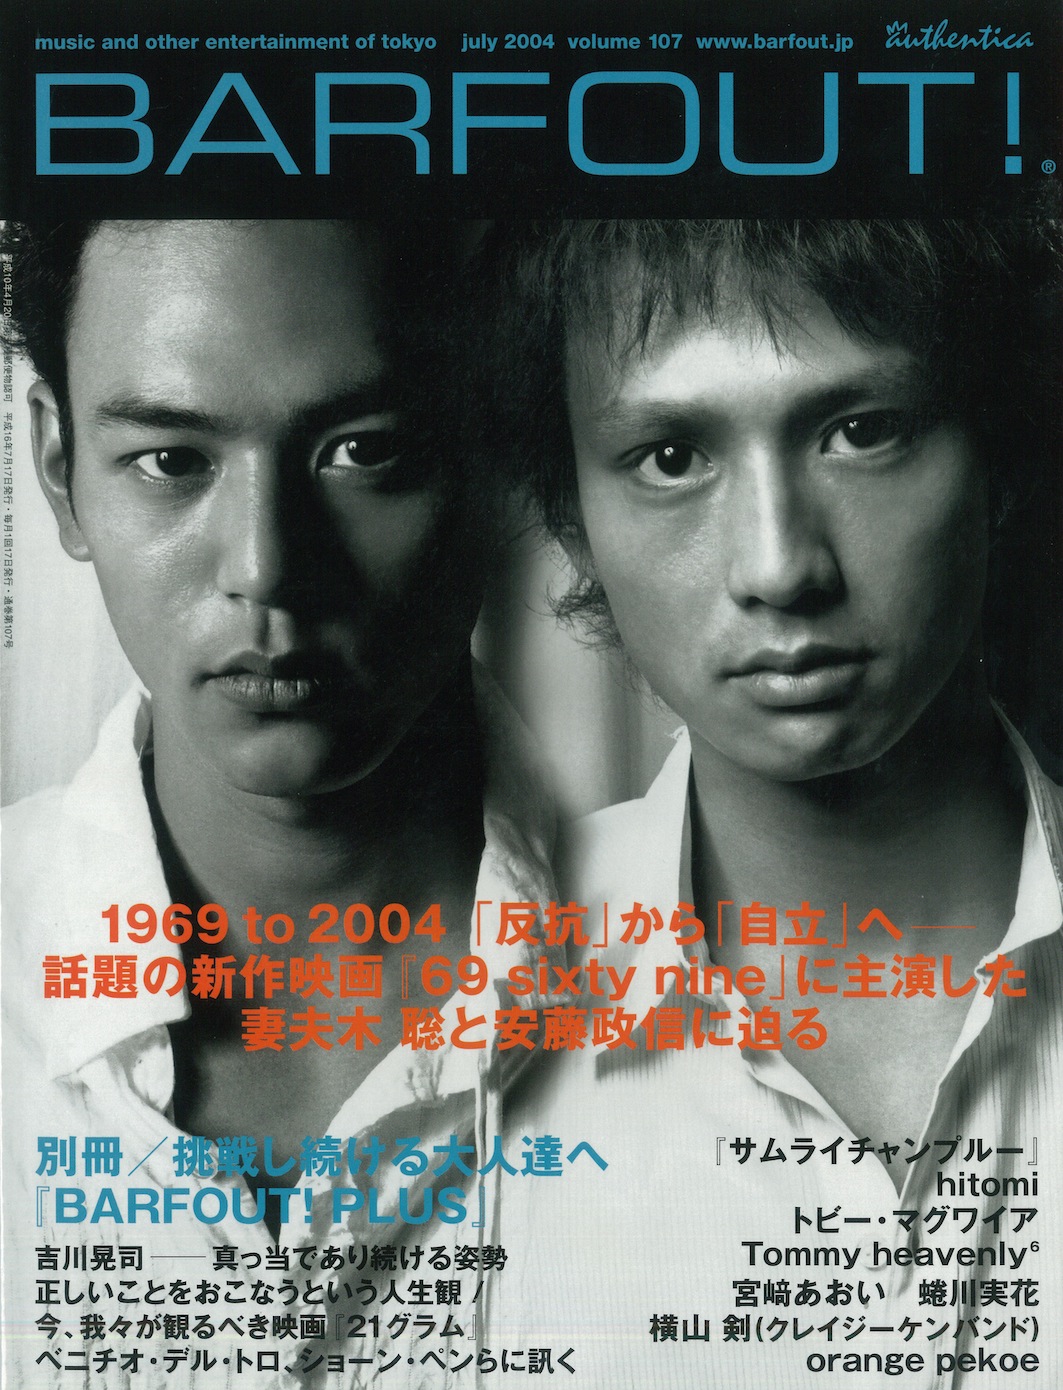 JULY 2004 VOLUME 107